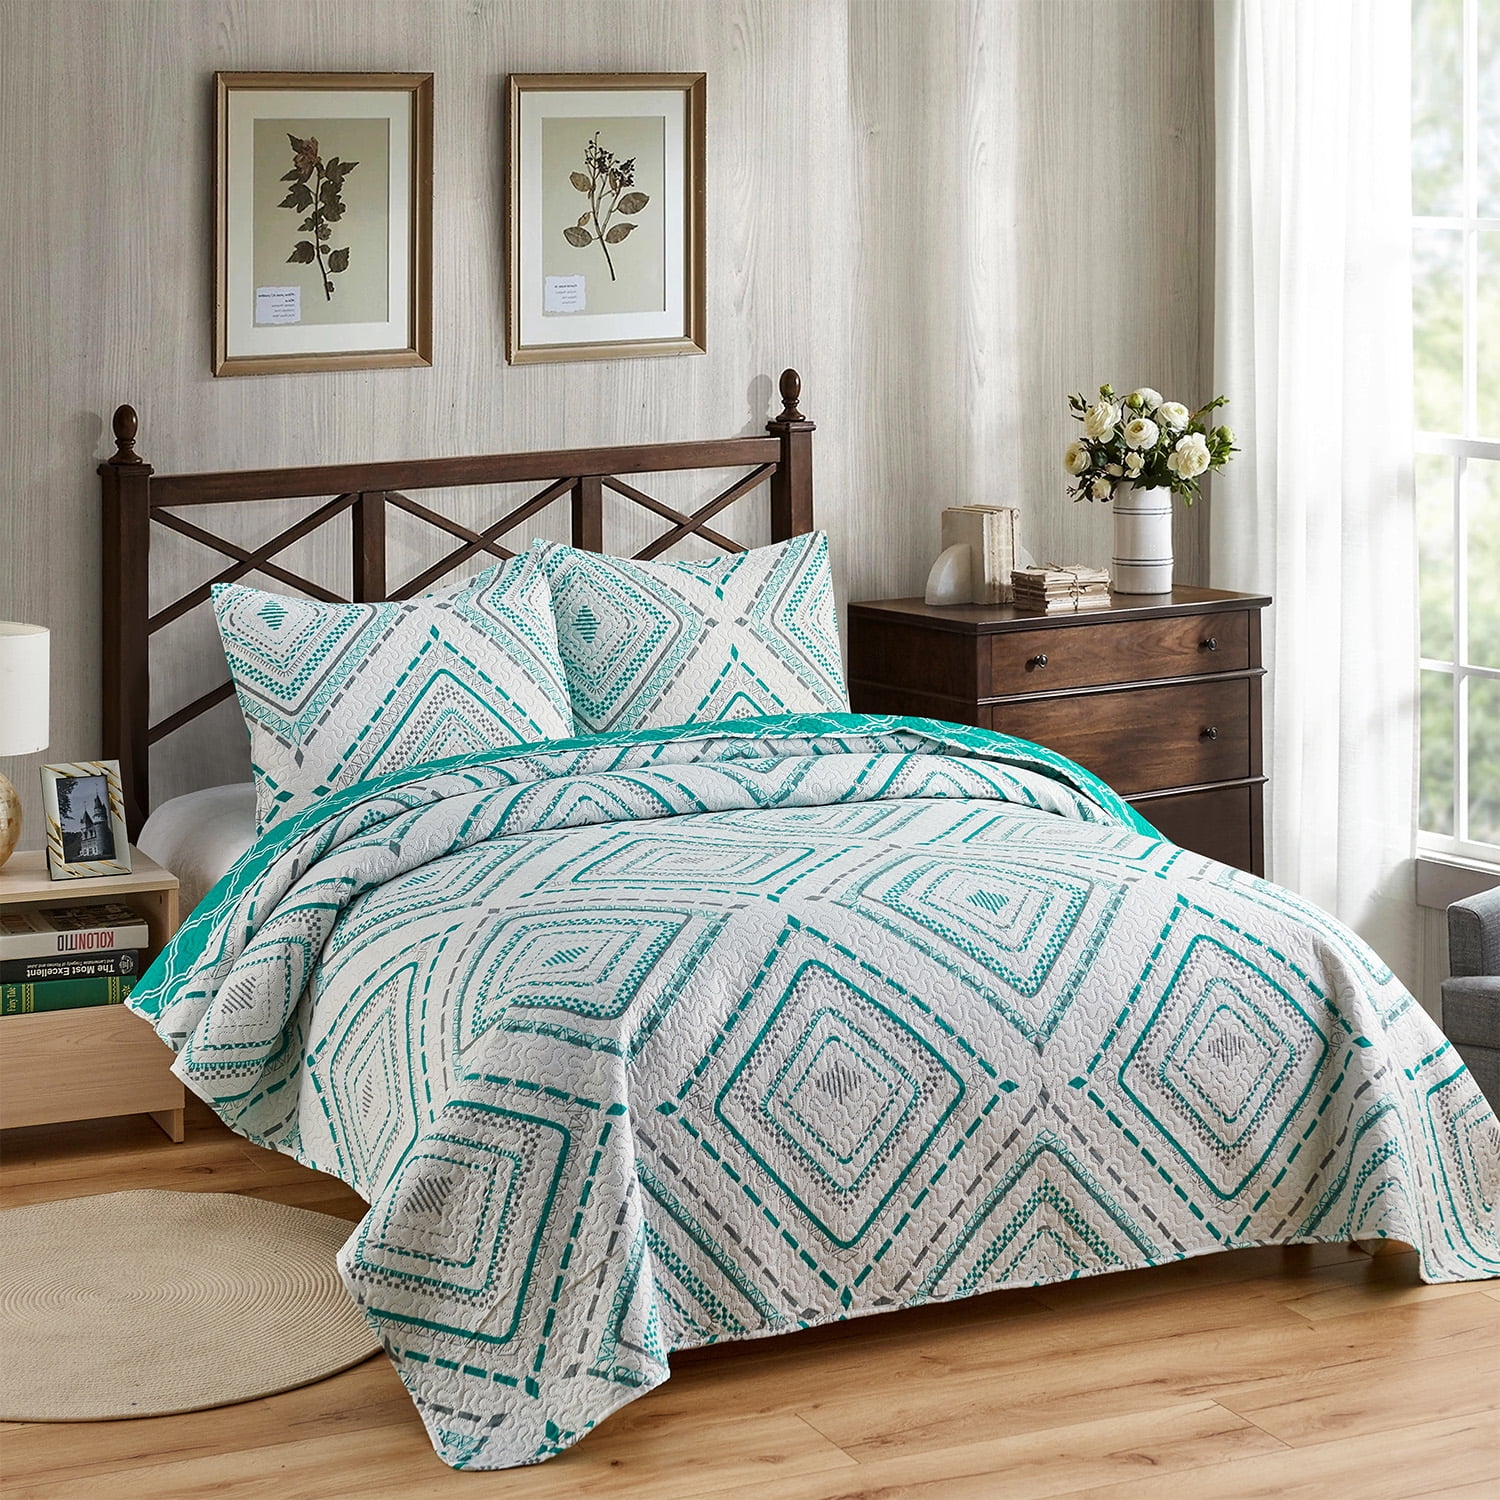 100% Polyester Microfiber 3PC Aqua Green Quilt Coverlet Bedspread Set-3 Sizes 